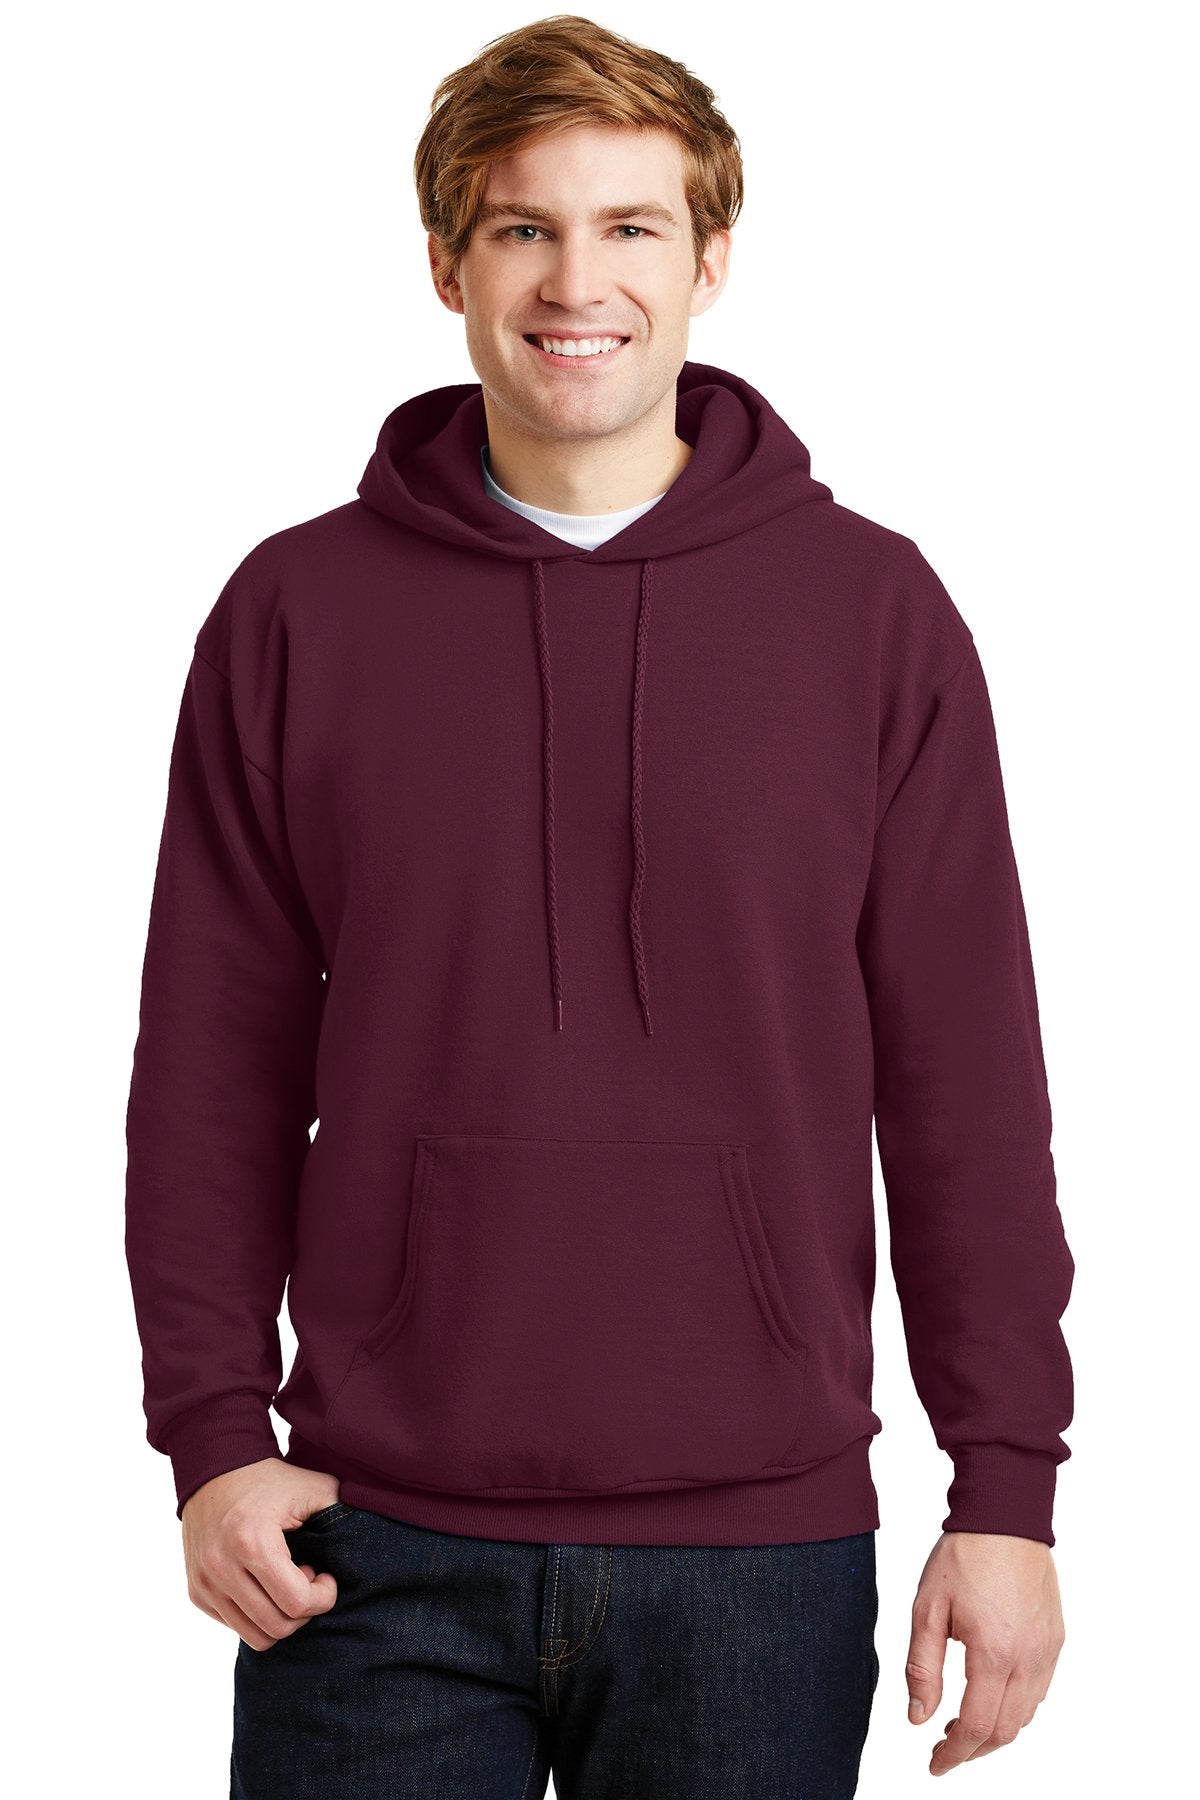 Hanes EcoSmart Pullover Hooded Sweatshirt in Maroon, with a custom logo